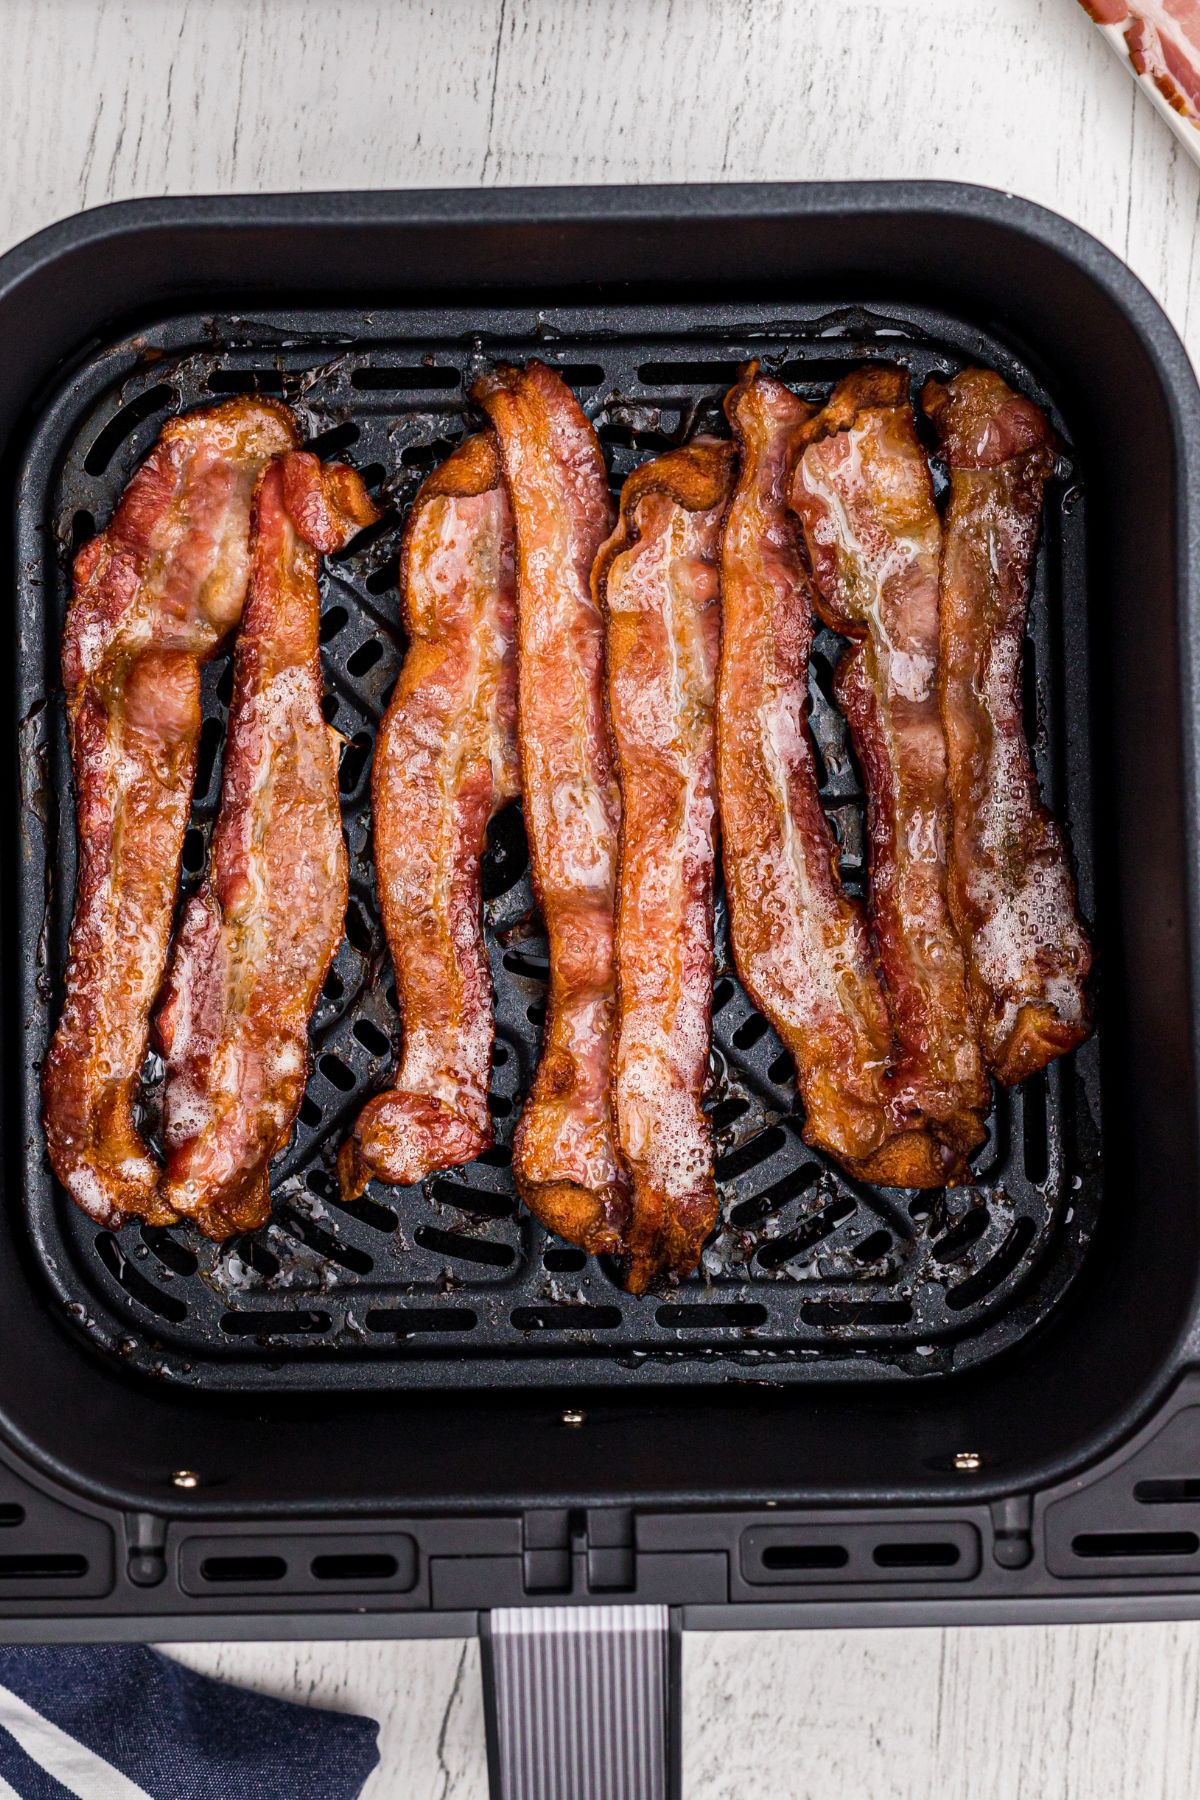 Juicy crispy bacon in the air fryer basket.